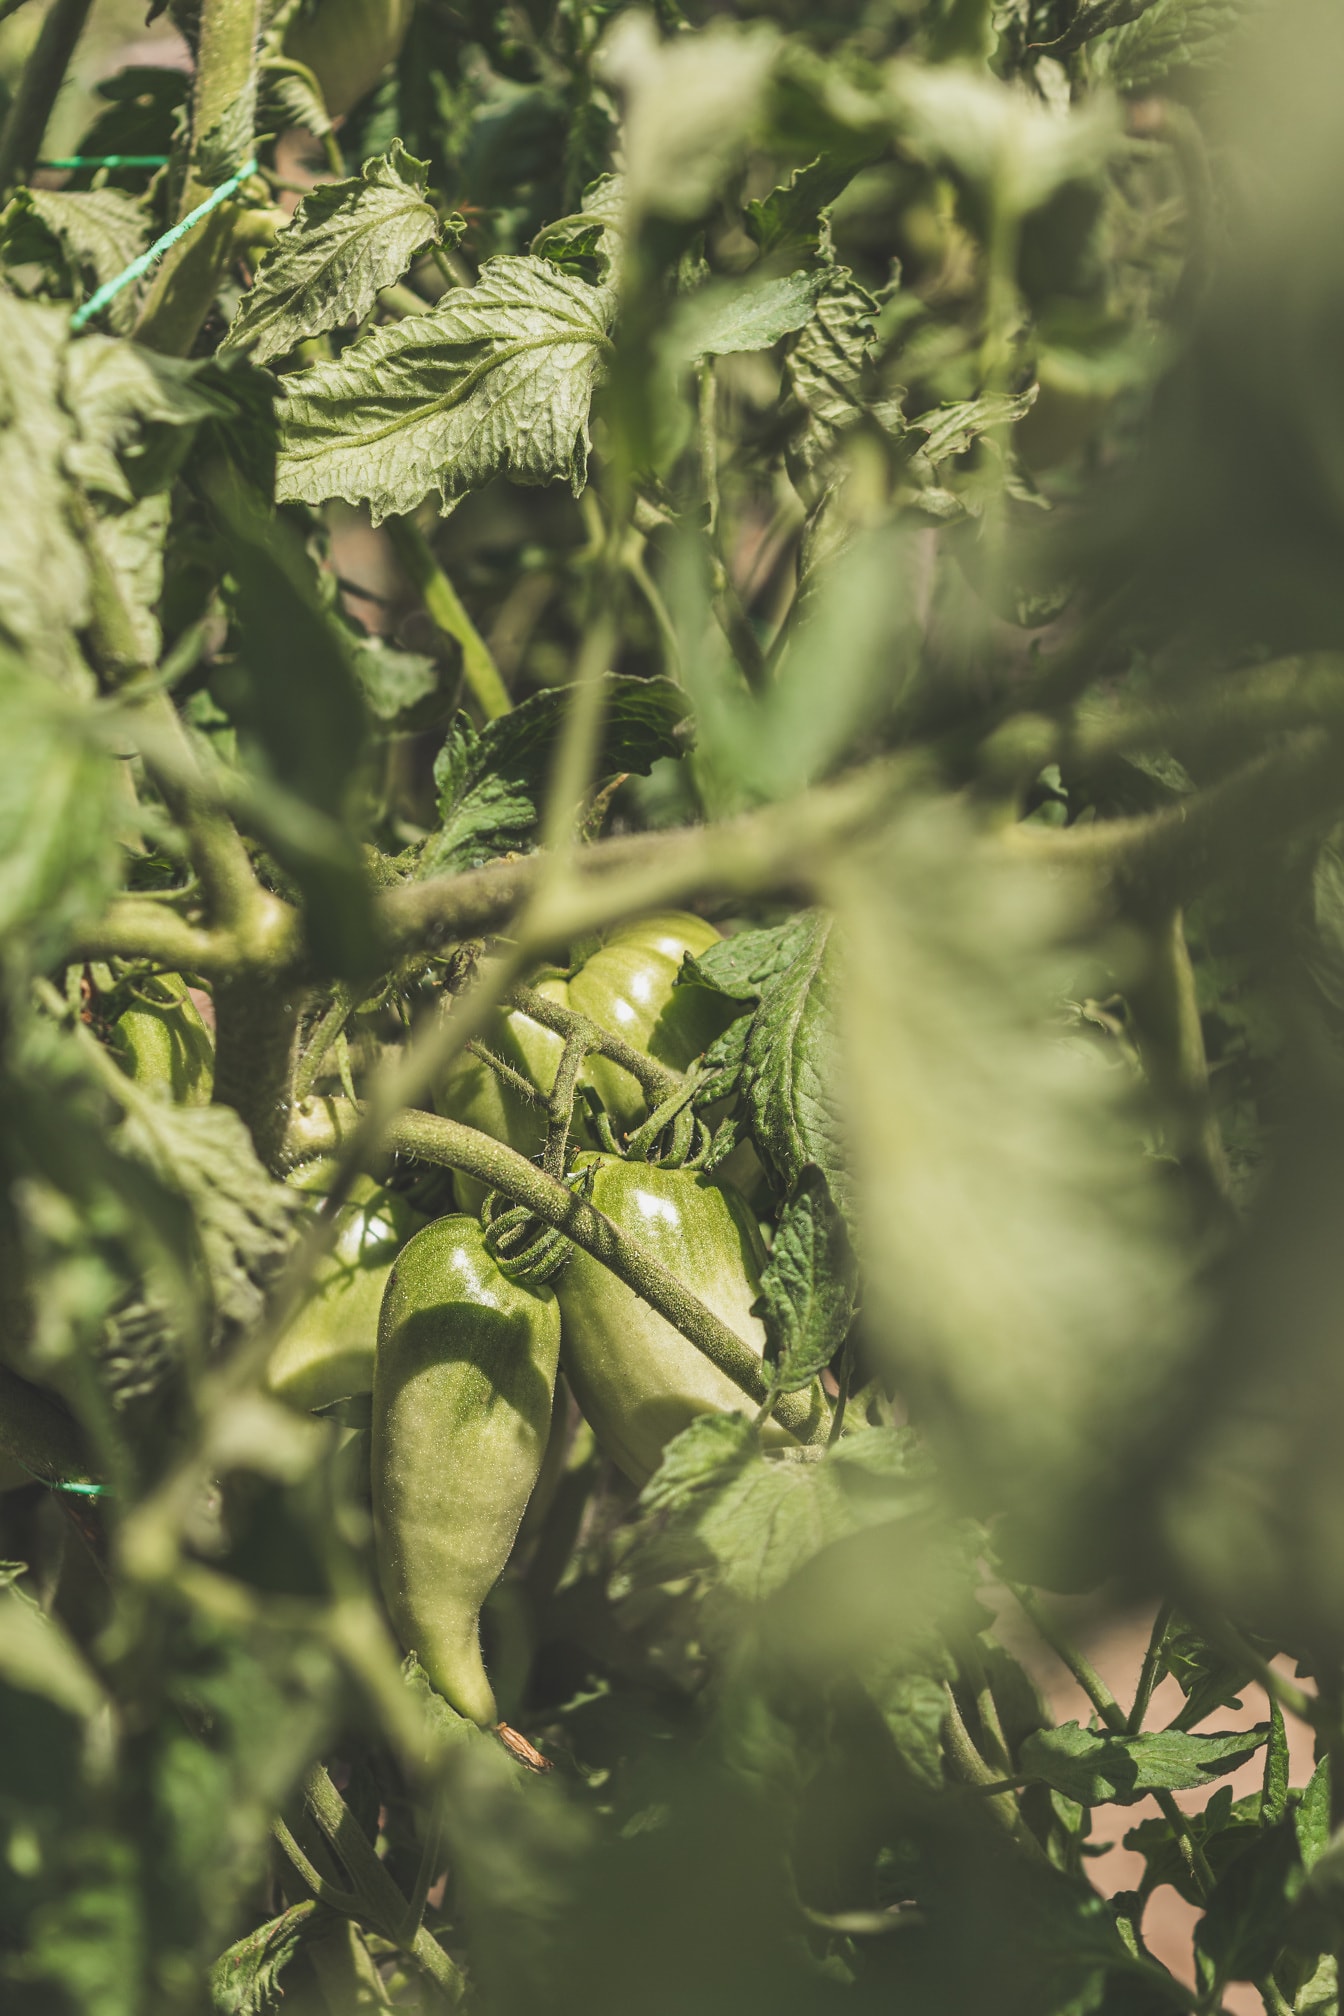 Green tomato plant (Solanum lycopersicum) growing unripe tomatoes